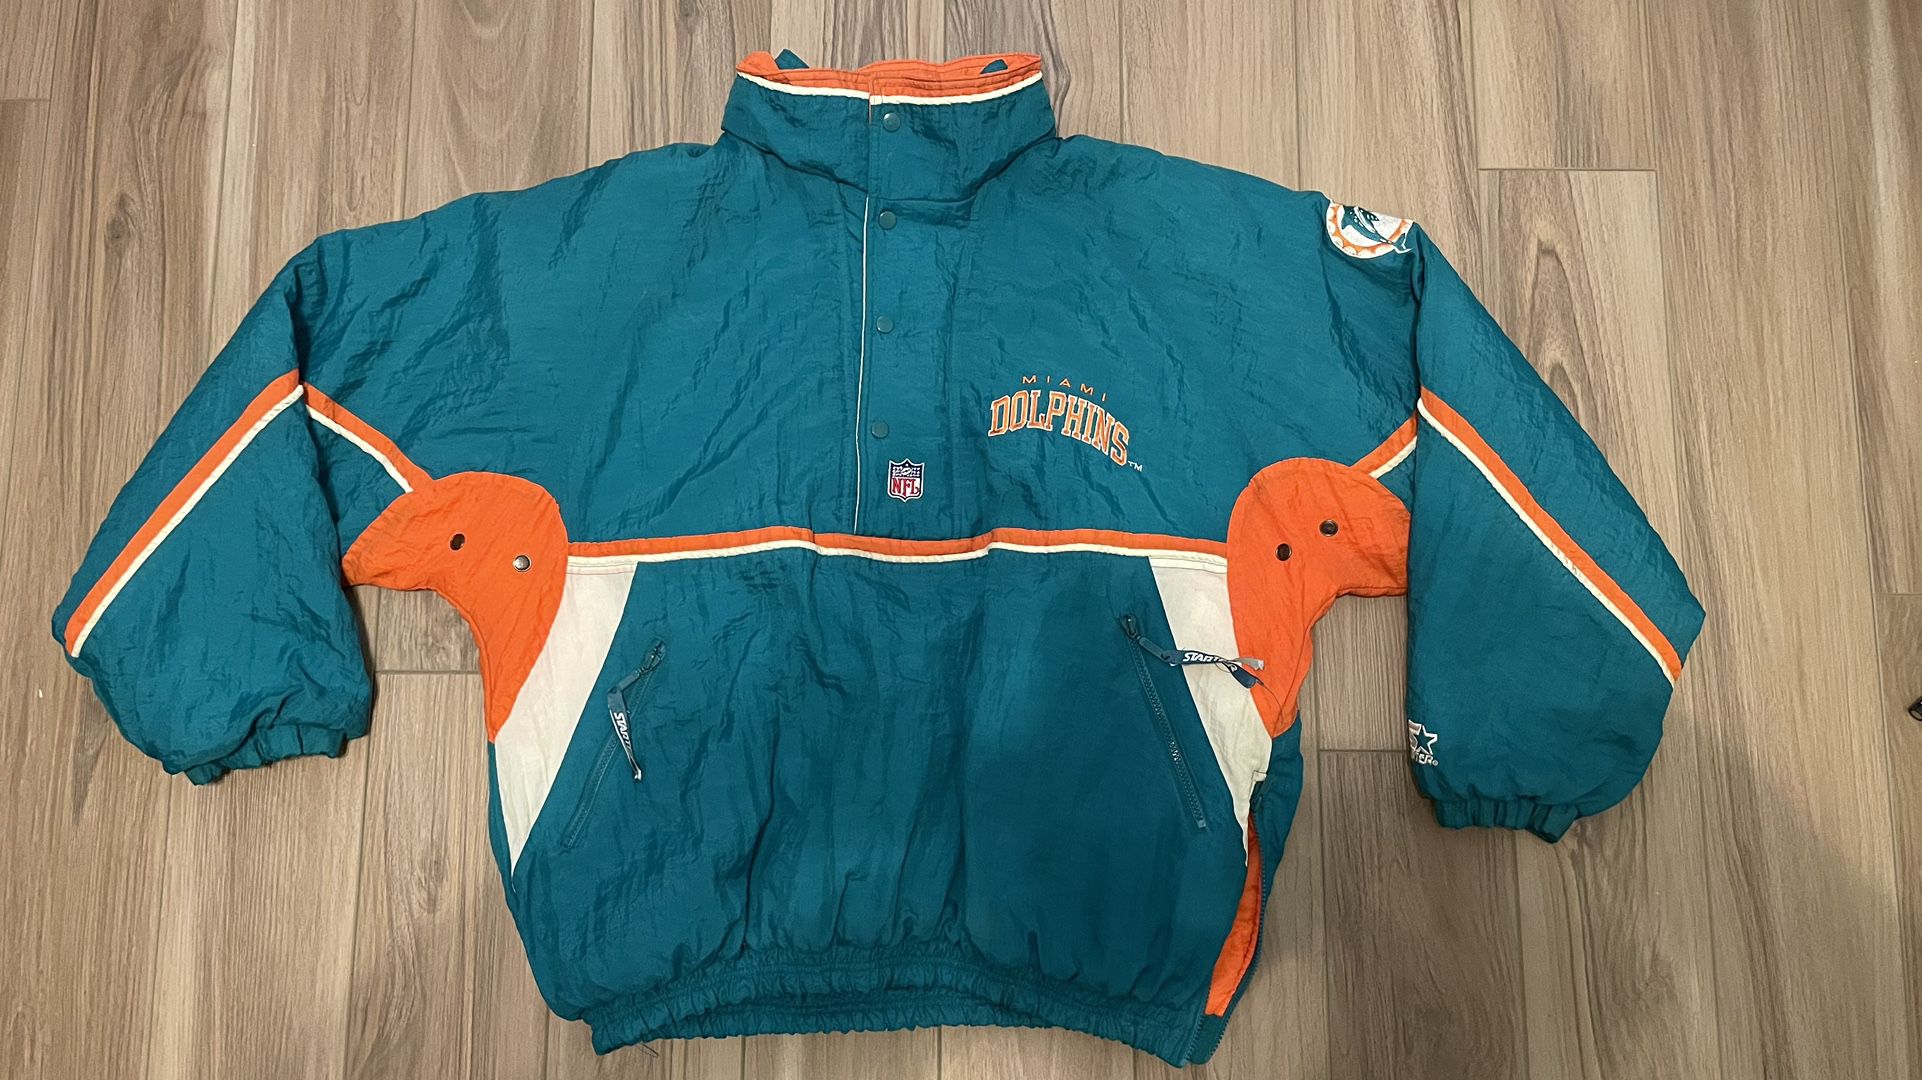 Vintage XL Miami Dolphins Starter Jacket.